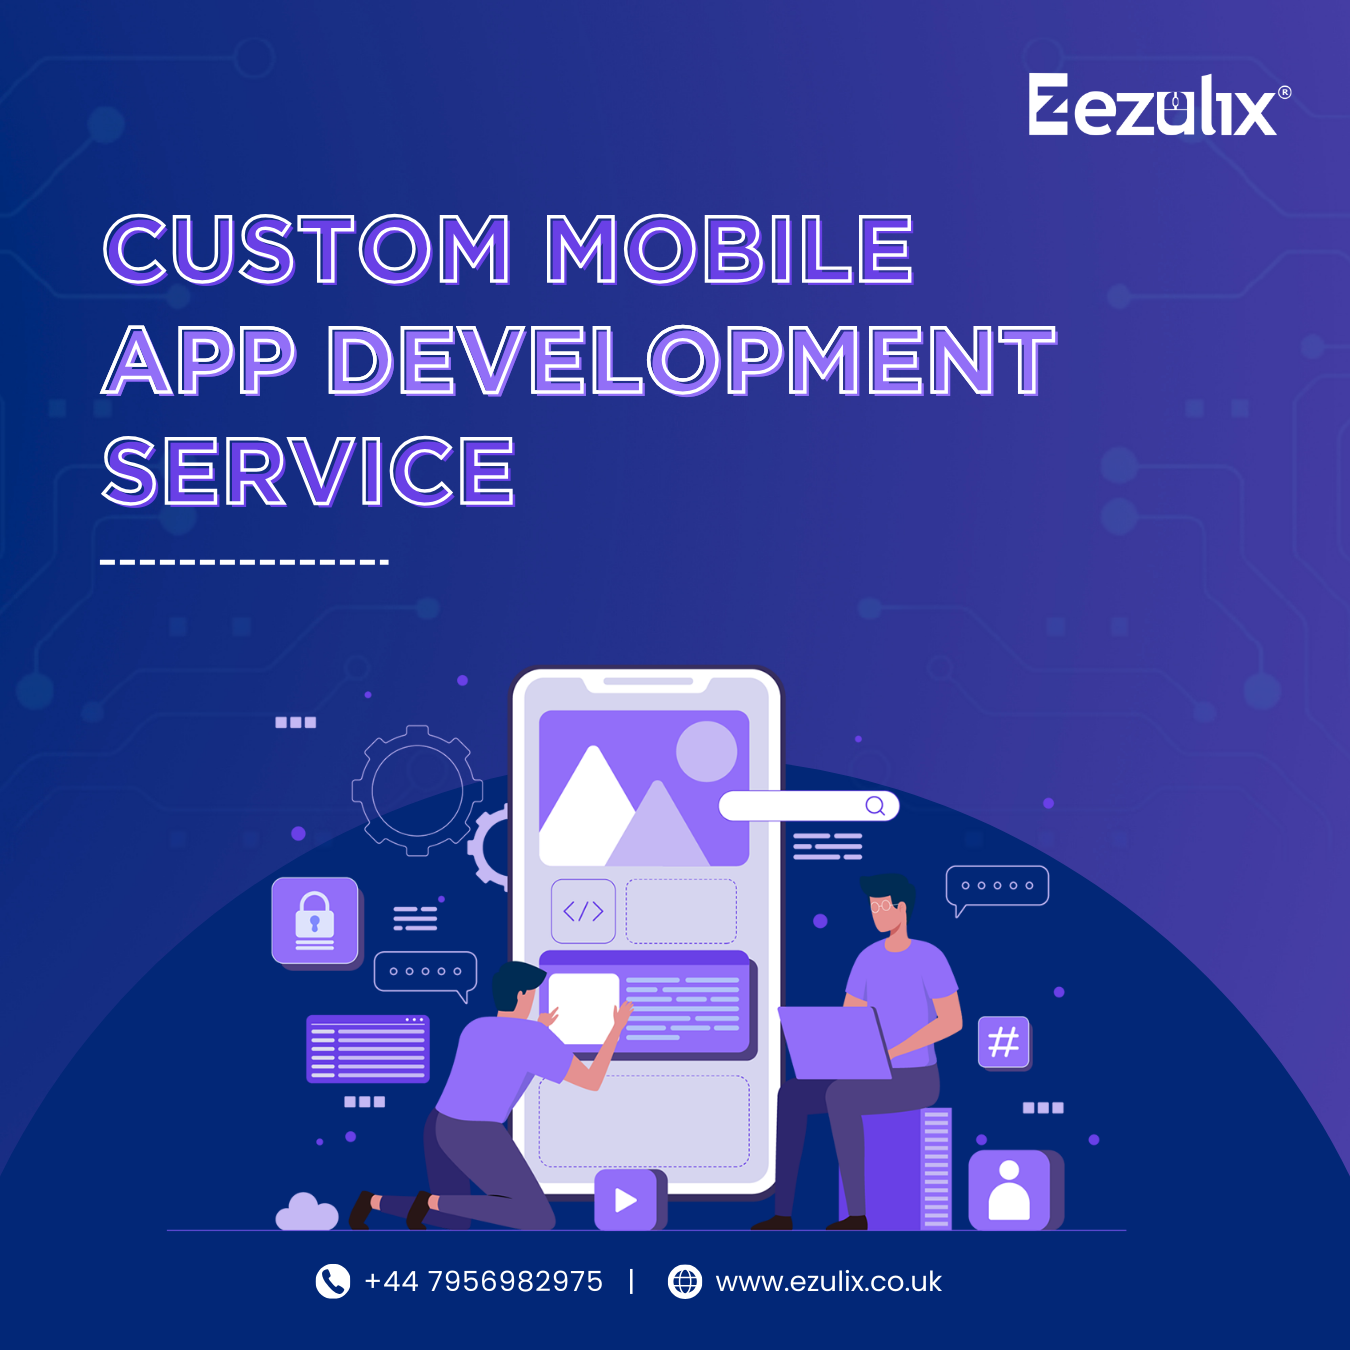 Ezulix Software Pvt. Ltd.